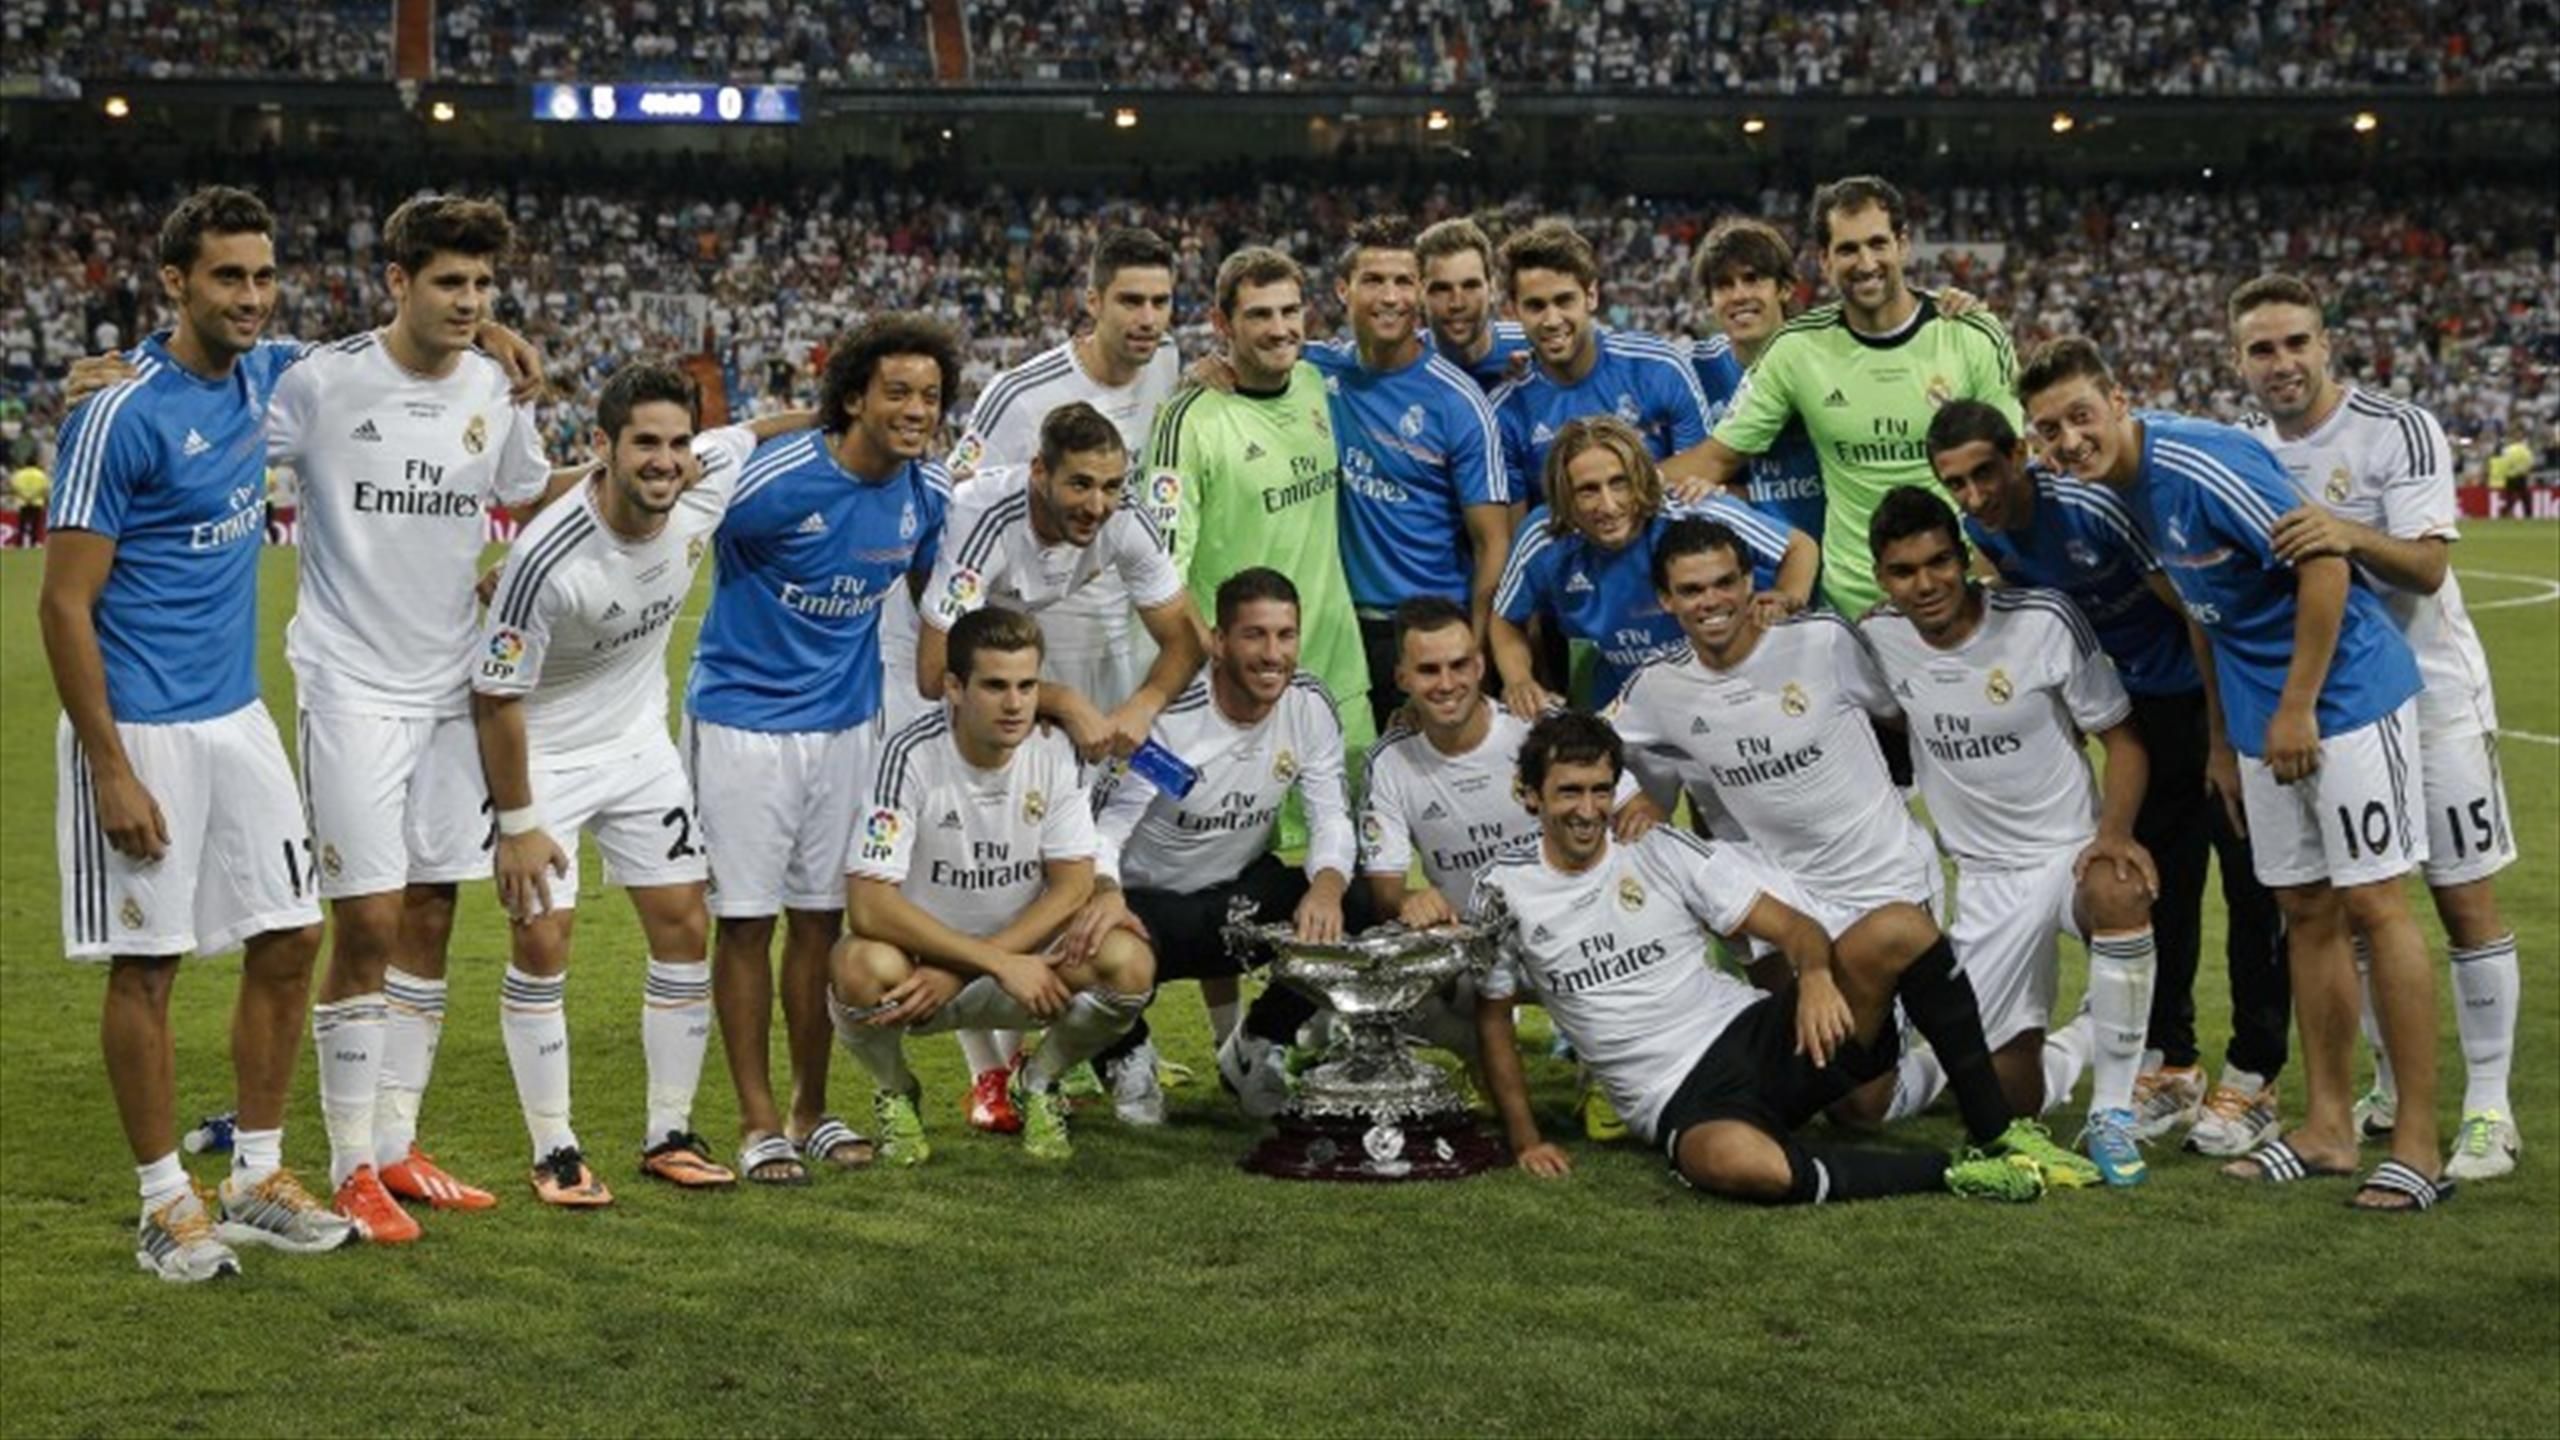 El Real Madrid recupera el Trofeo Bernabéu - Eurosport